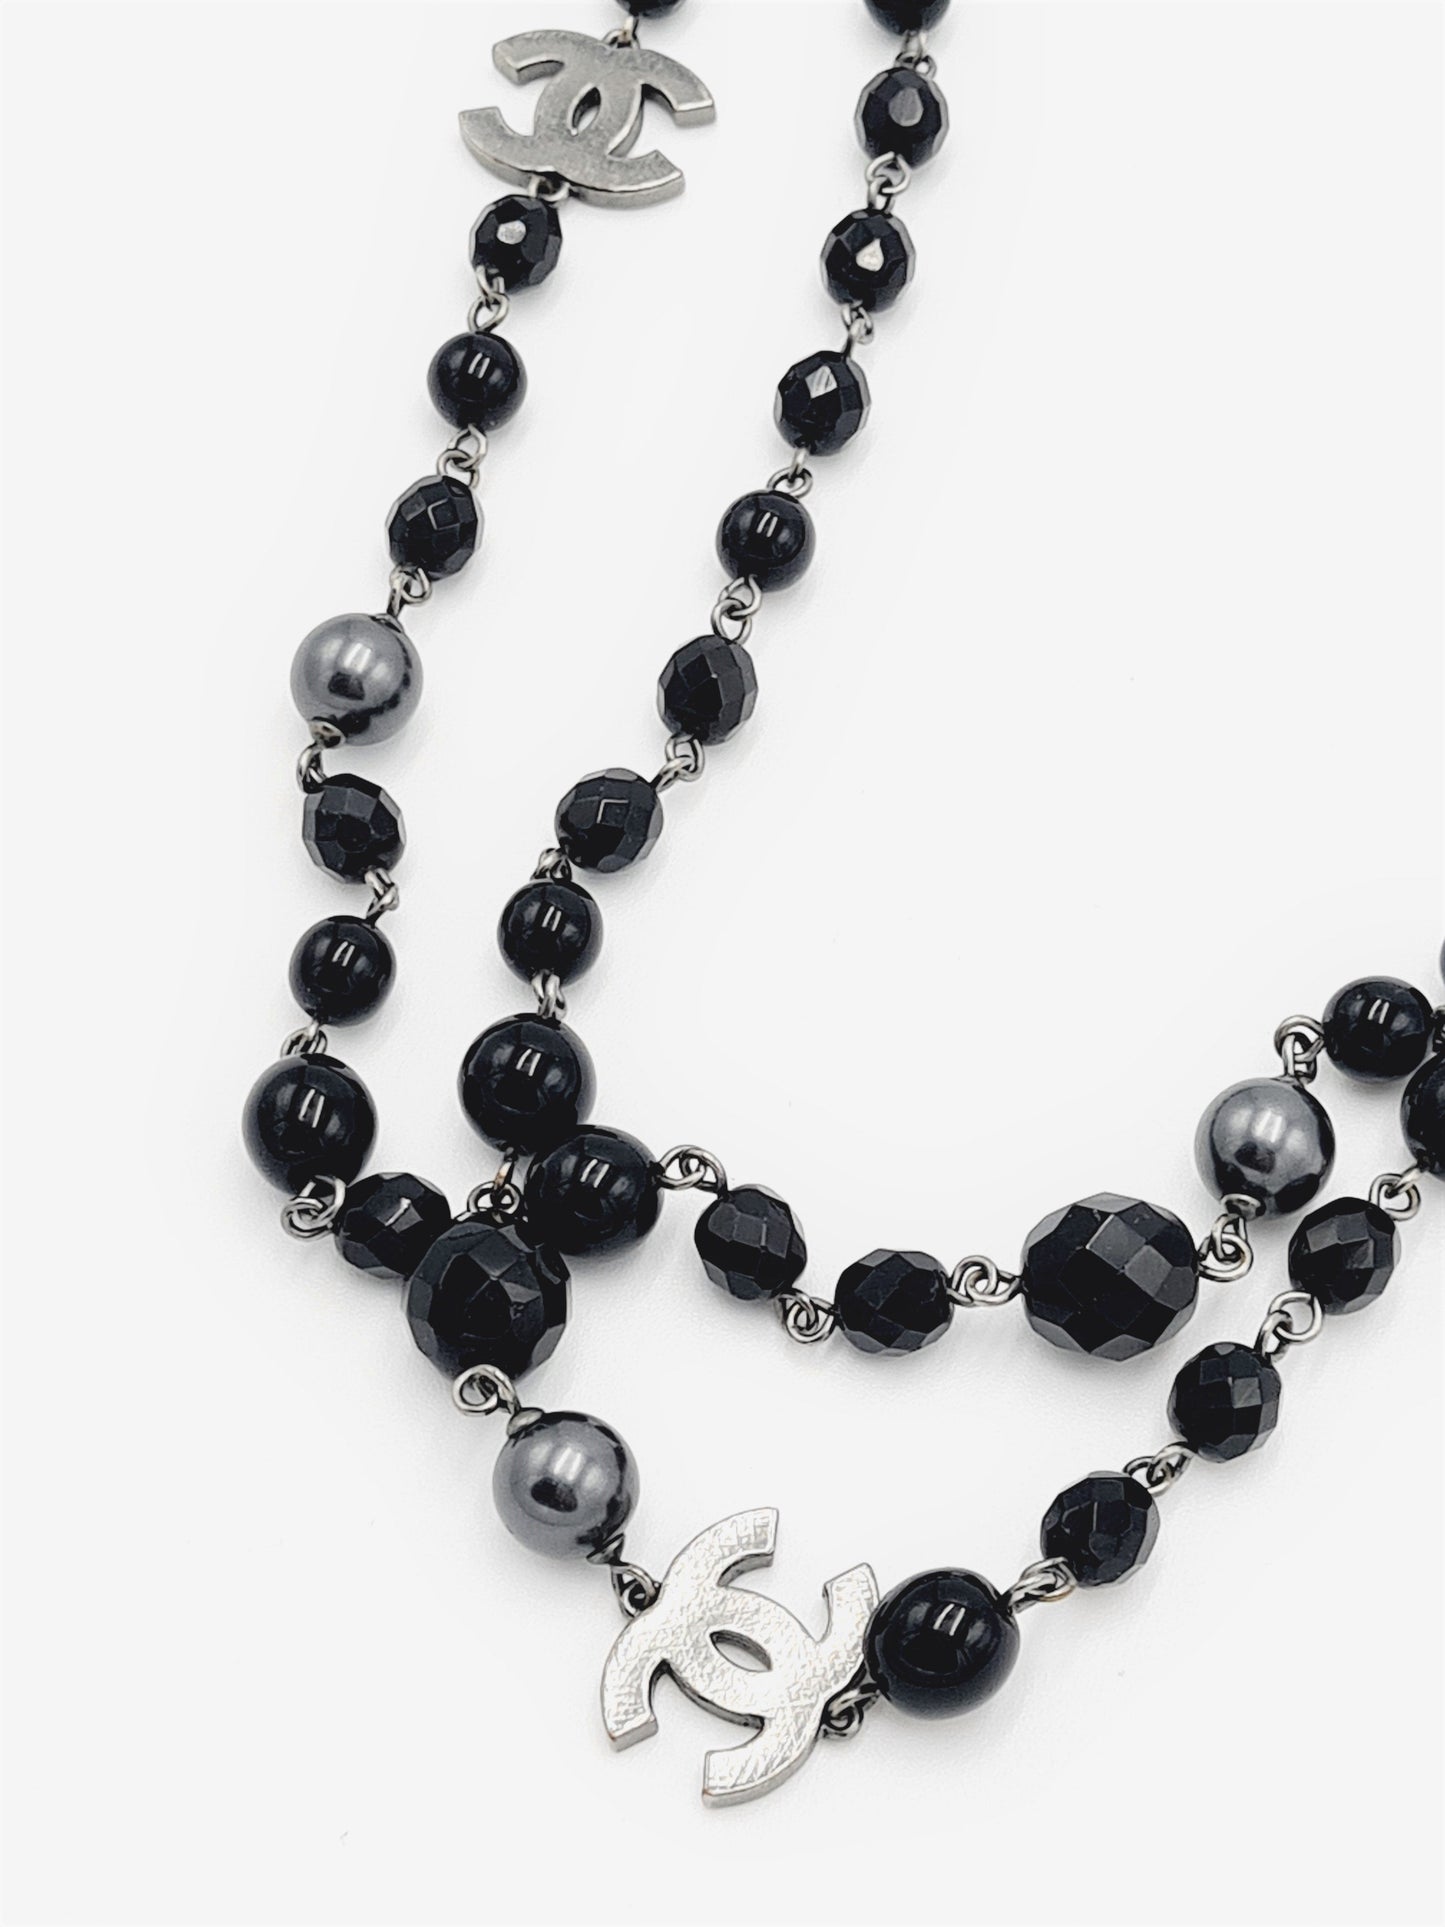 Lysis vintage Chanel black long necklace - 2010s